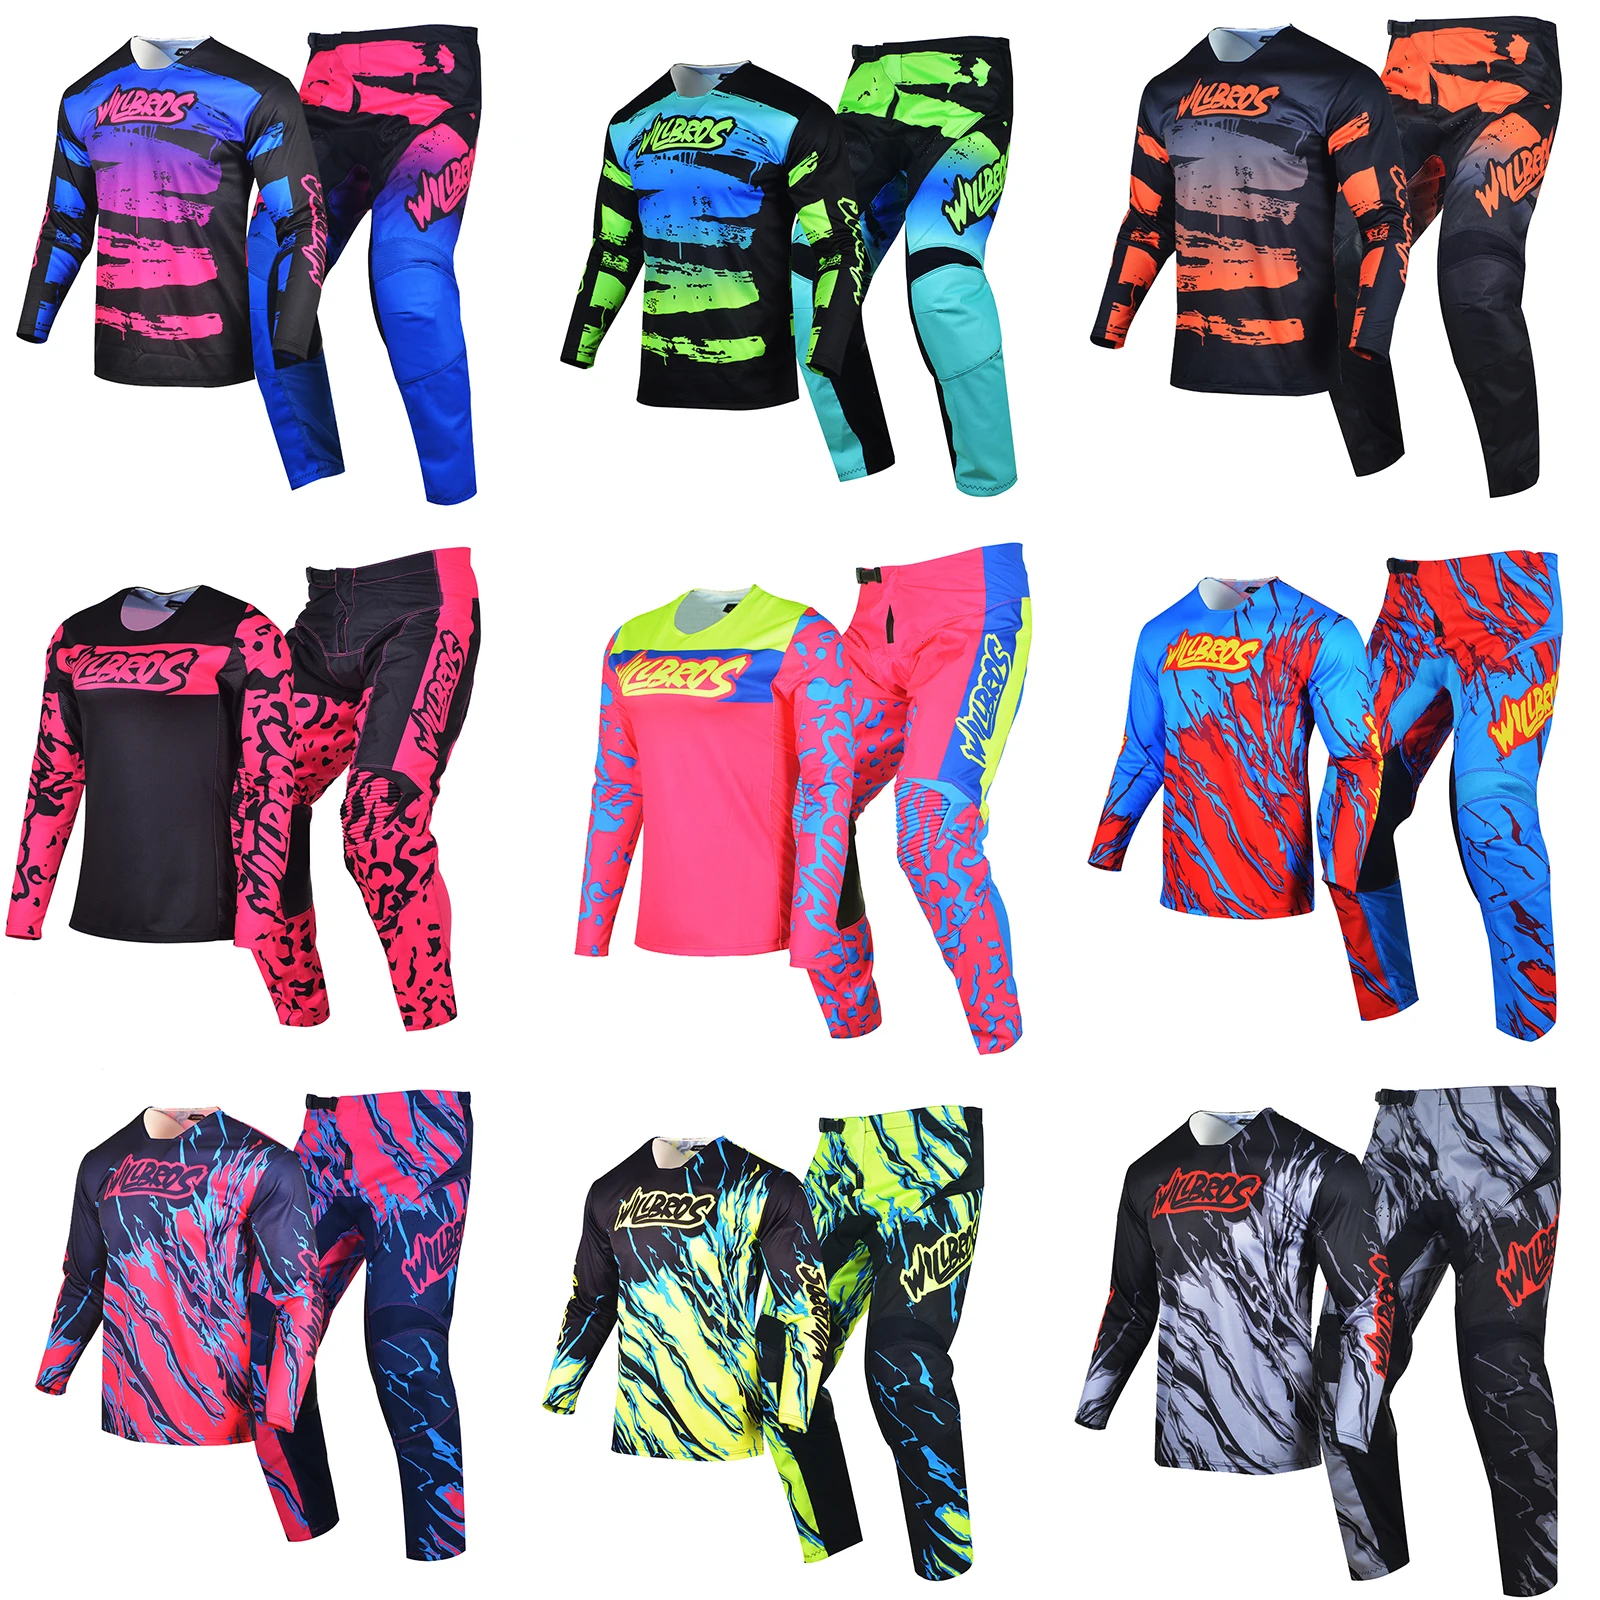 

Jersey Pants Combo MX Gear Set Motocross Outfit Willbros Enduro Dirtbike Suit Moto Cross MTB ATV UTV DH Bicycle BMX Race Kit Men